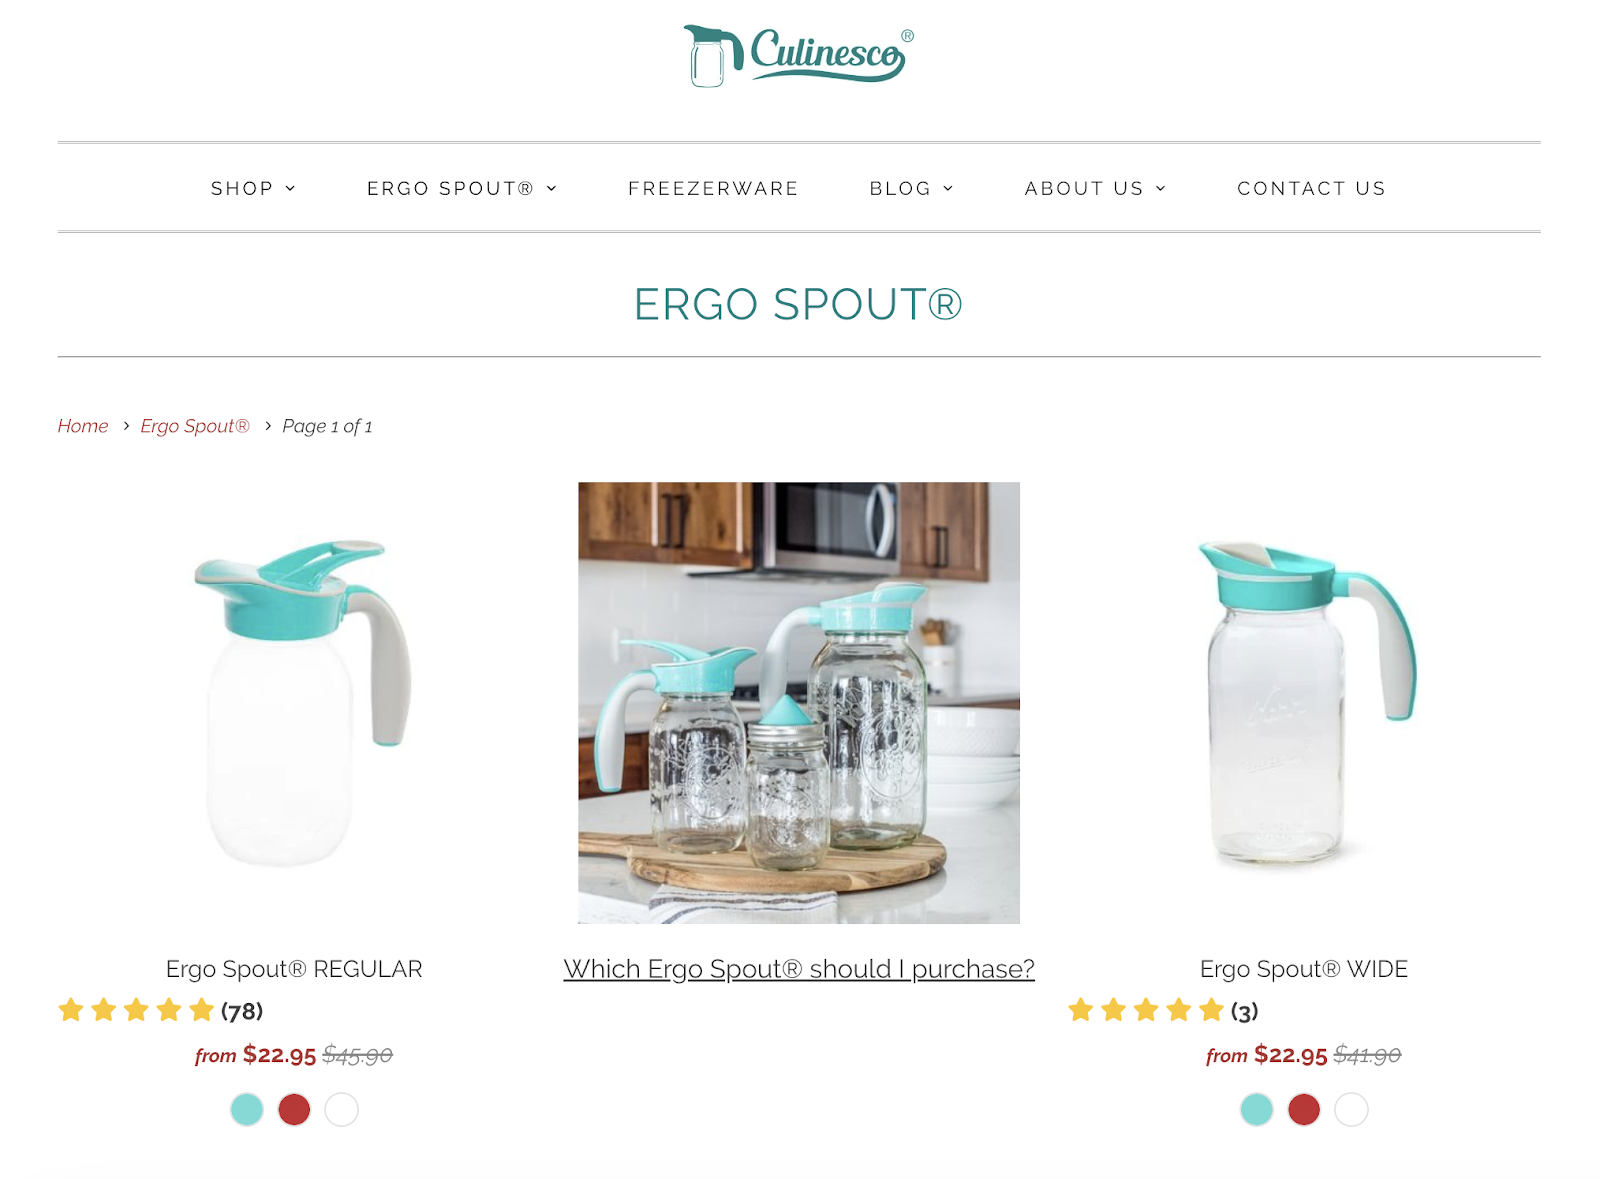 Culinesco.com shop page showing the Ergo Spout.